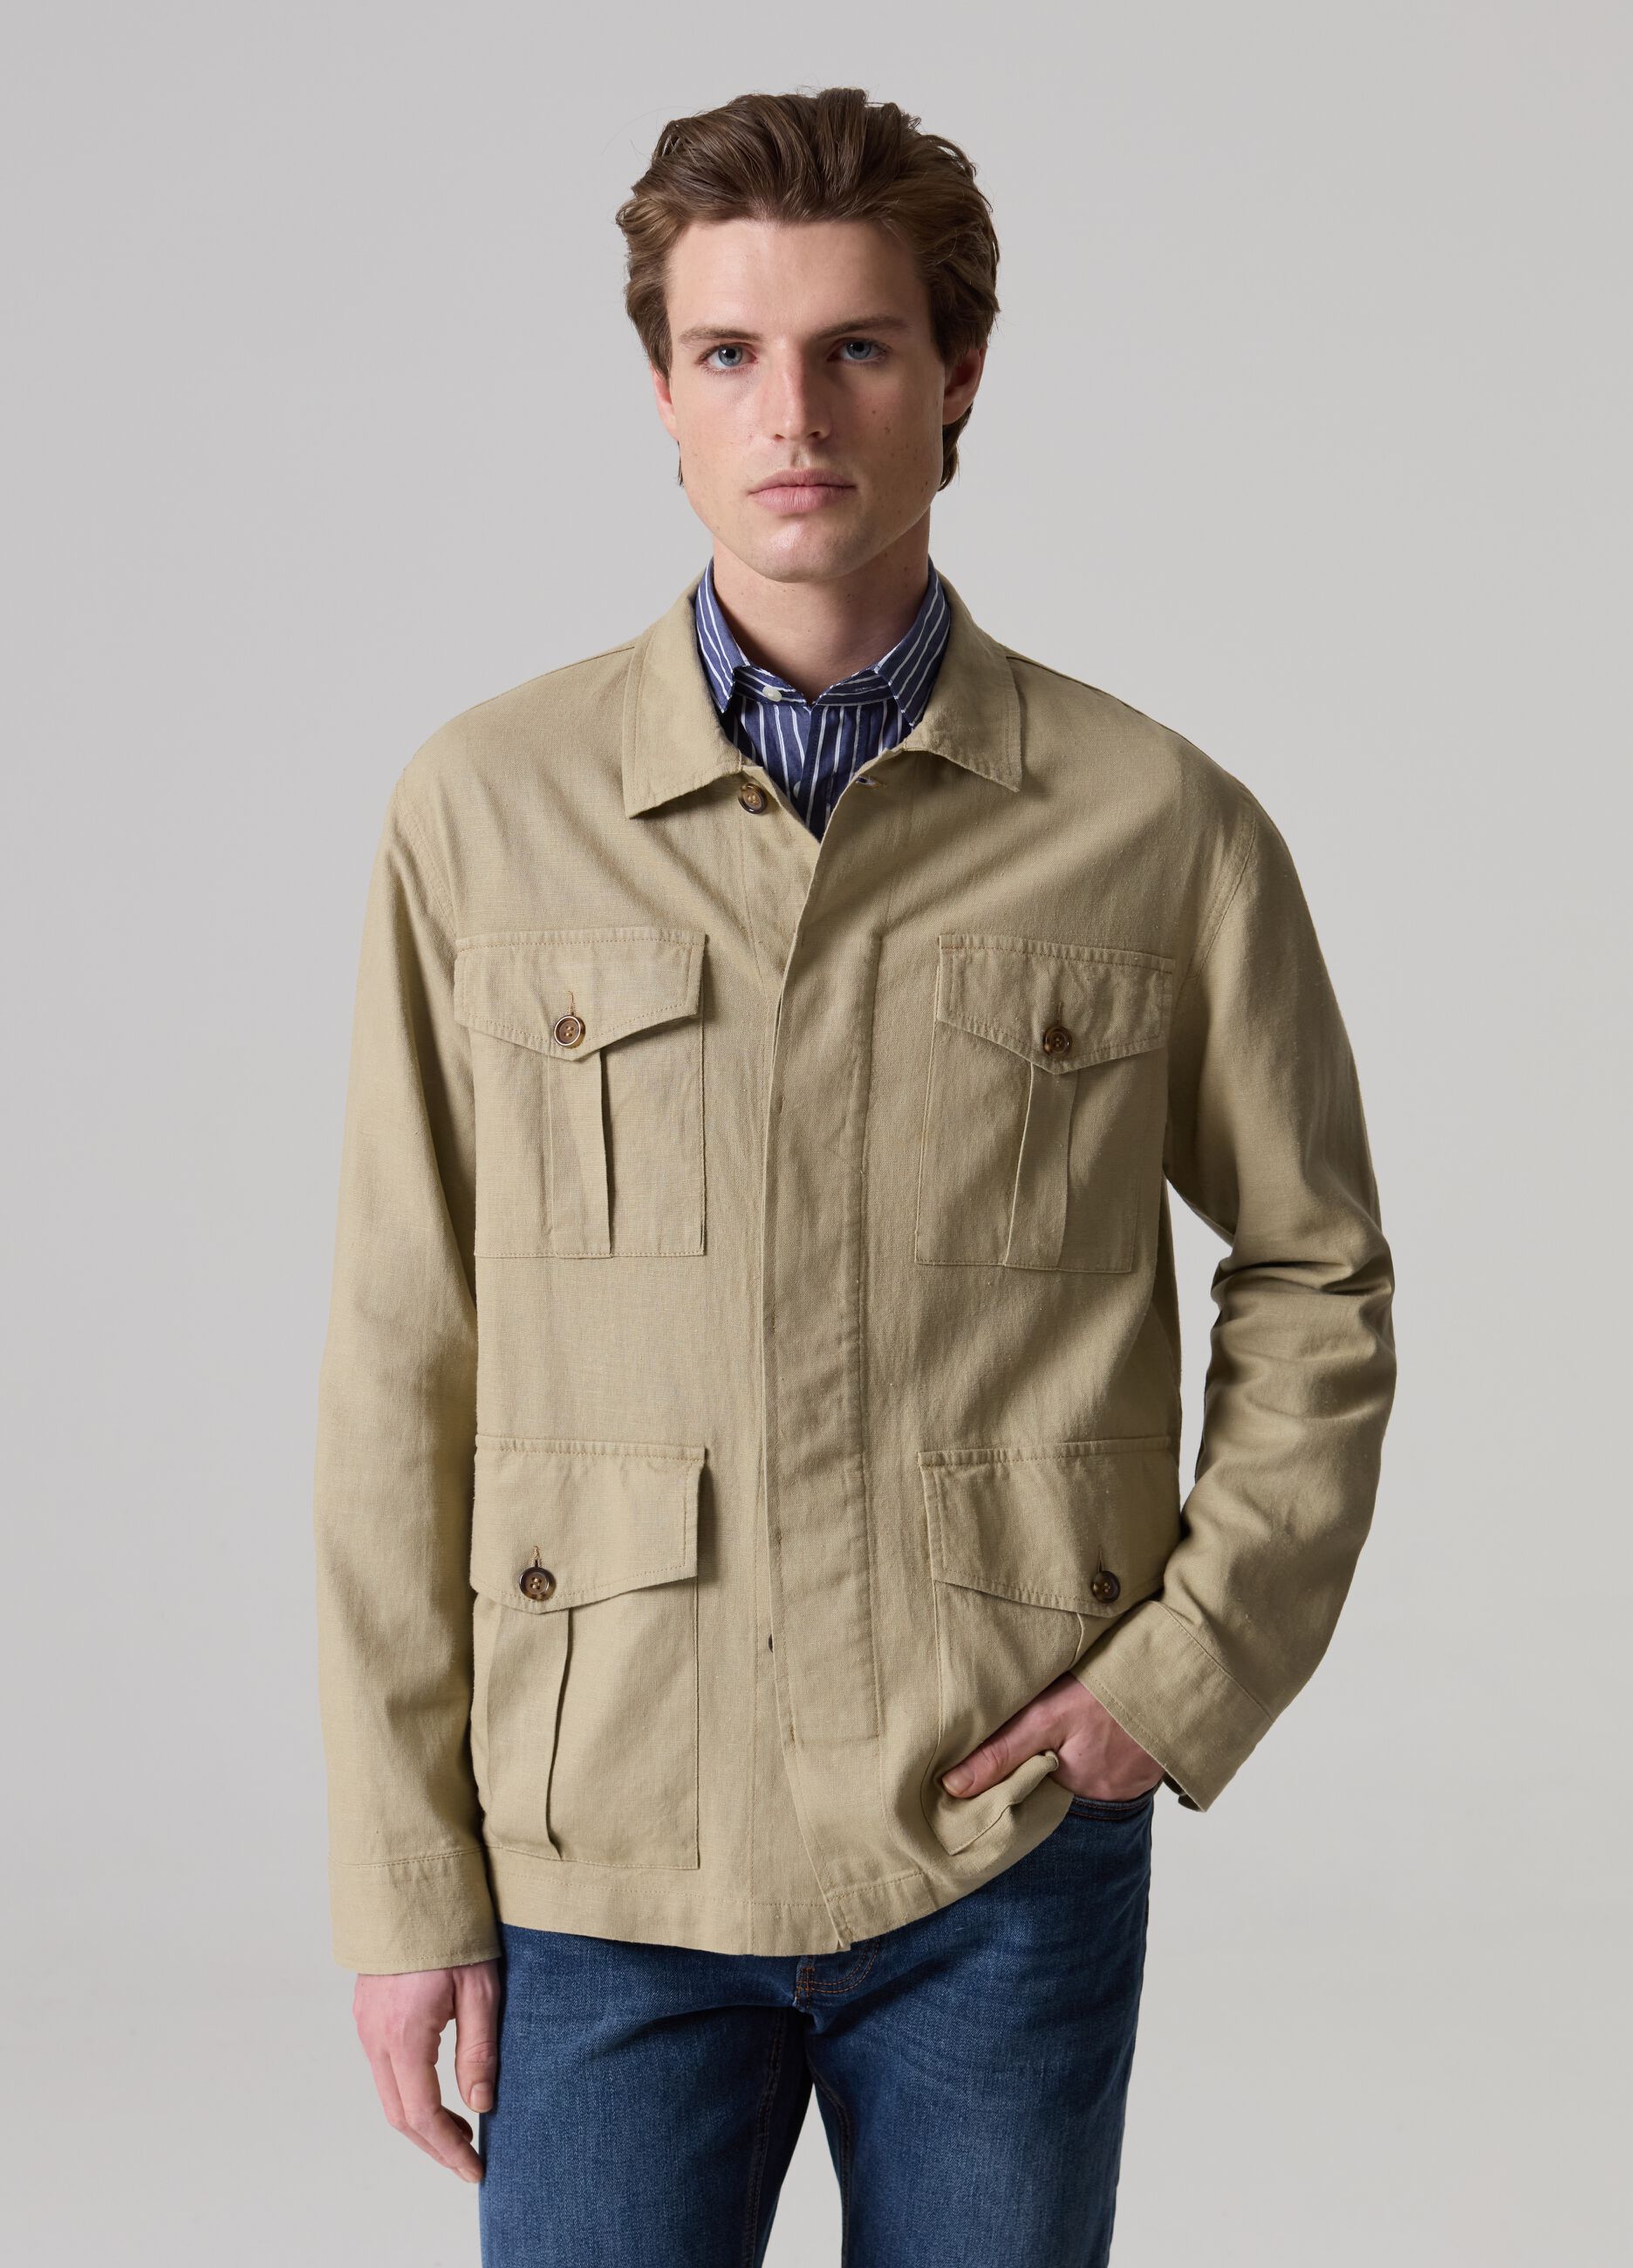 Safari jacket in linen and viscose